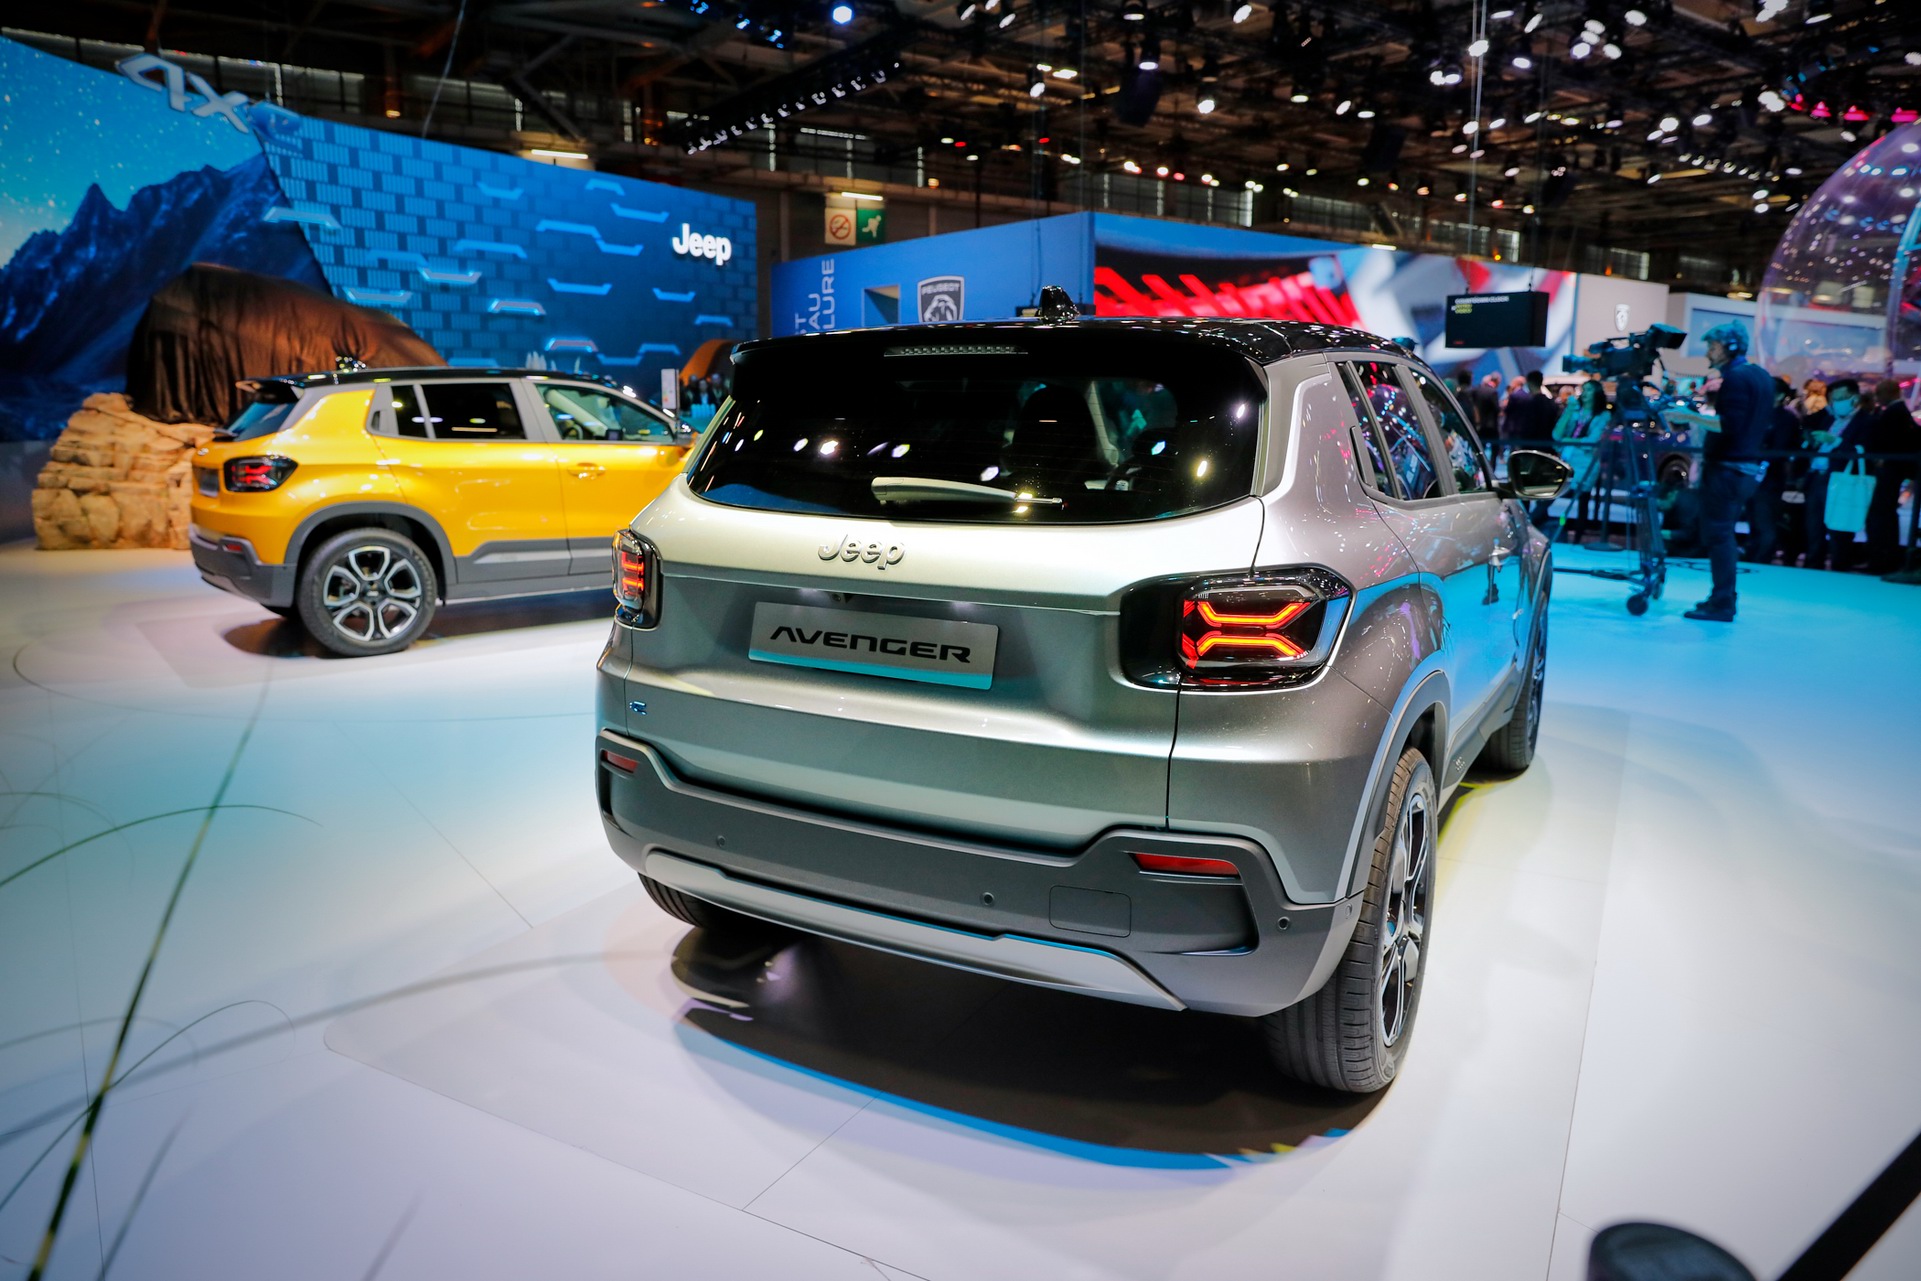 Jeep reveals new Avenger EV with 400km range at Paris Motor Show